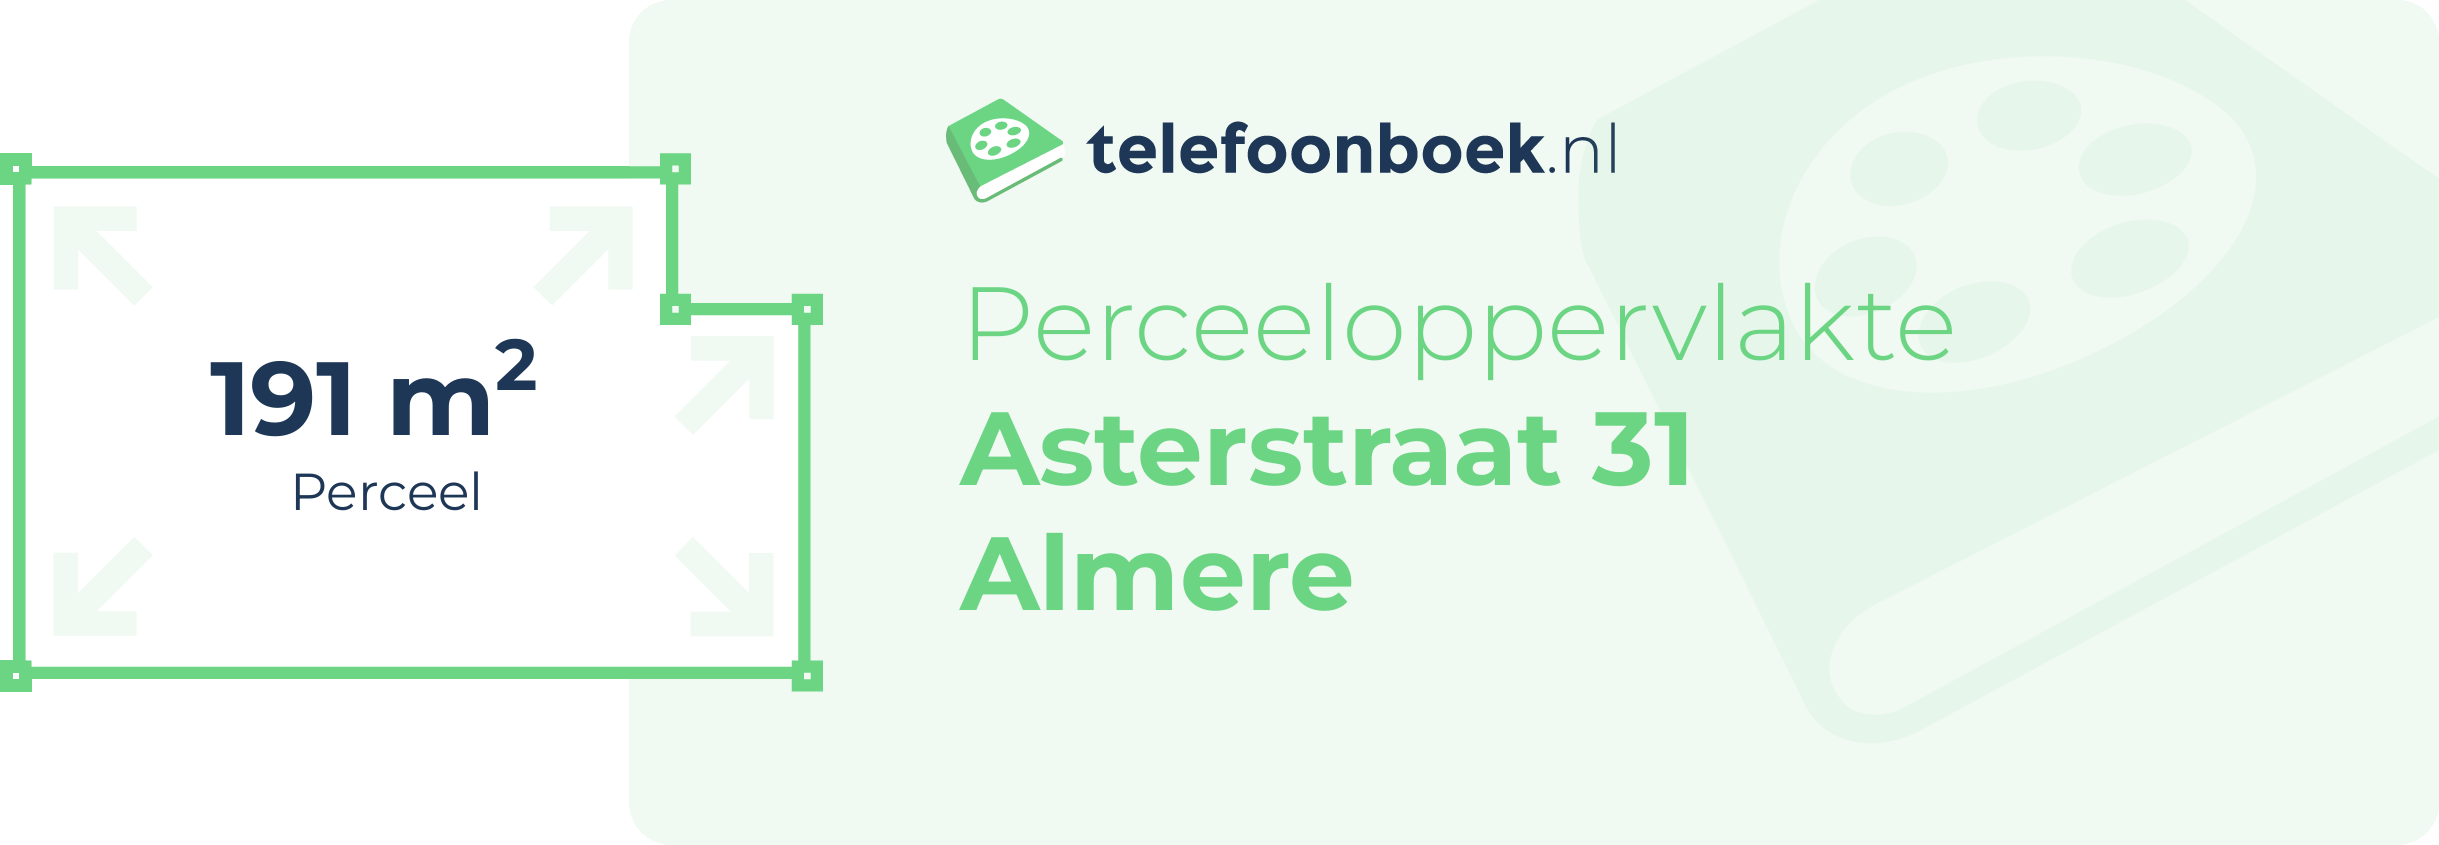 Perceeloppervlakte Asterstraat 31 Almere